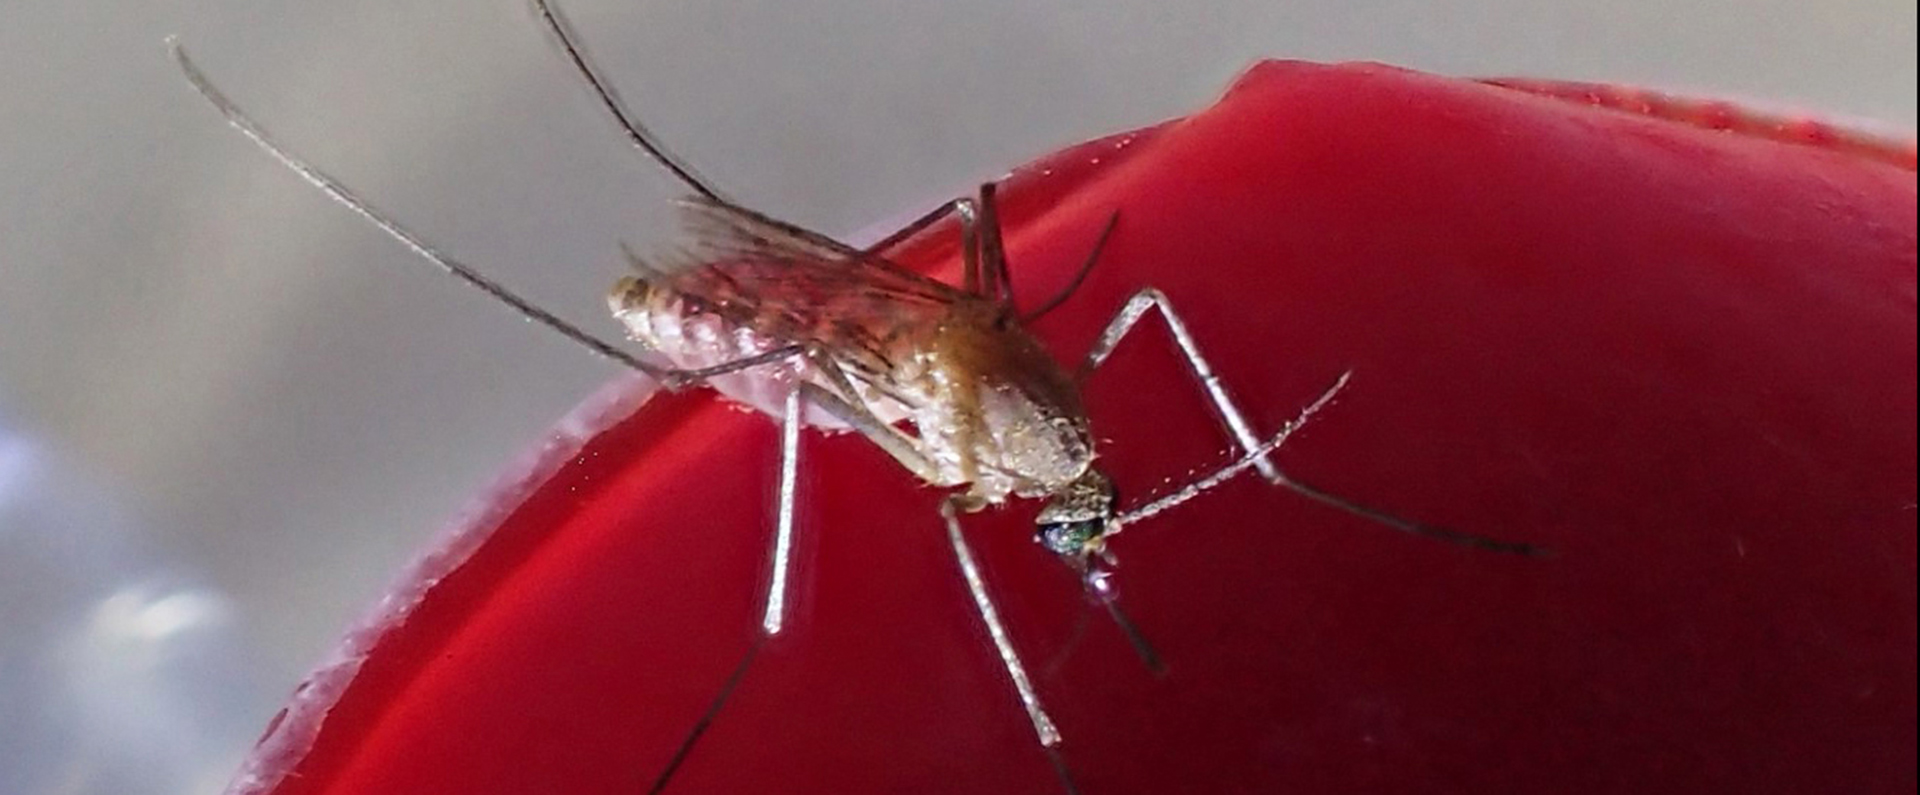 Culex quinquefaciatus mosquito feeds on an artificial blood feeder